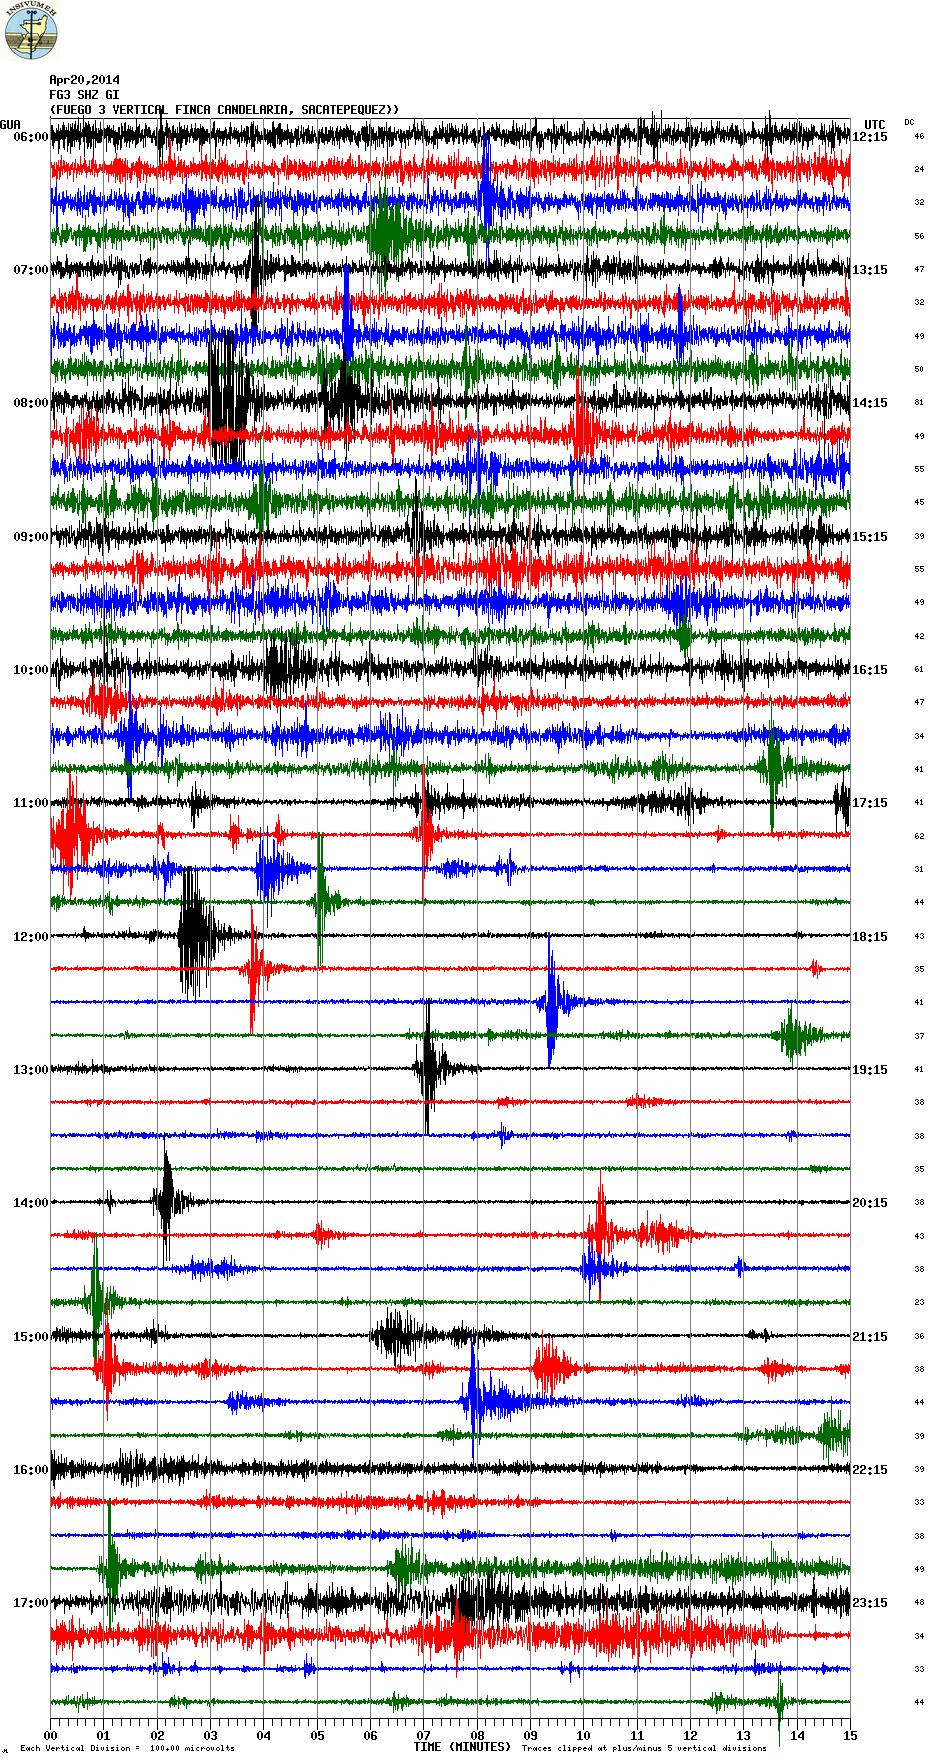 Seismic signal yesterday